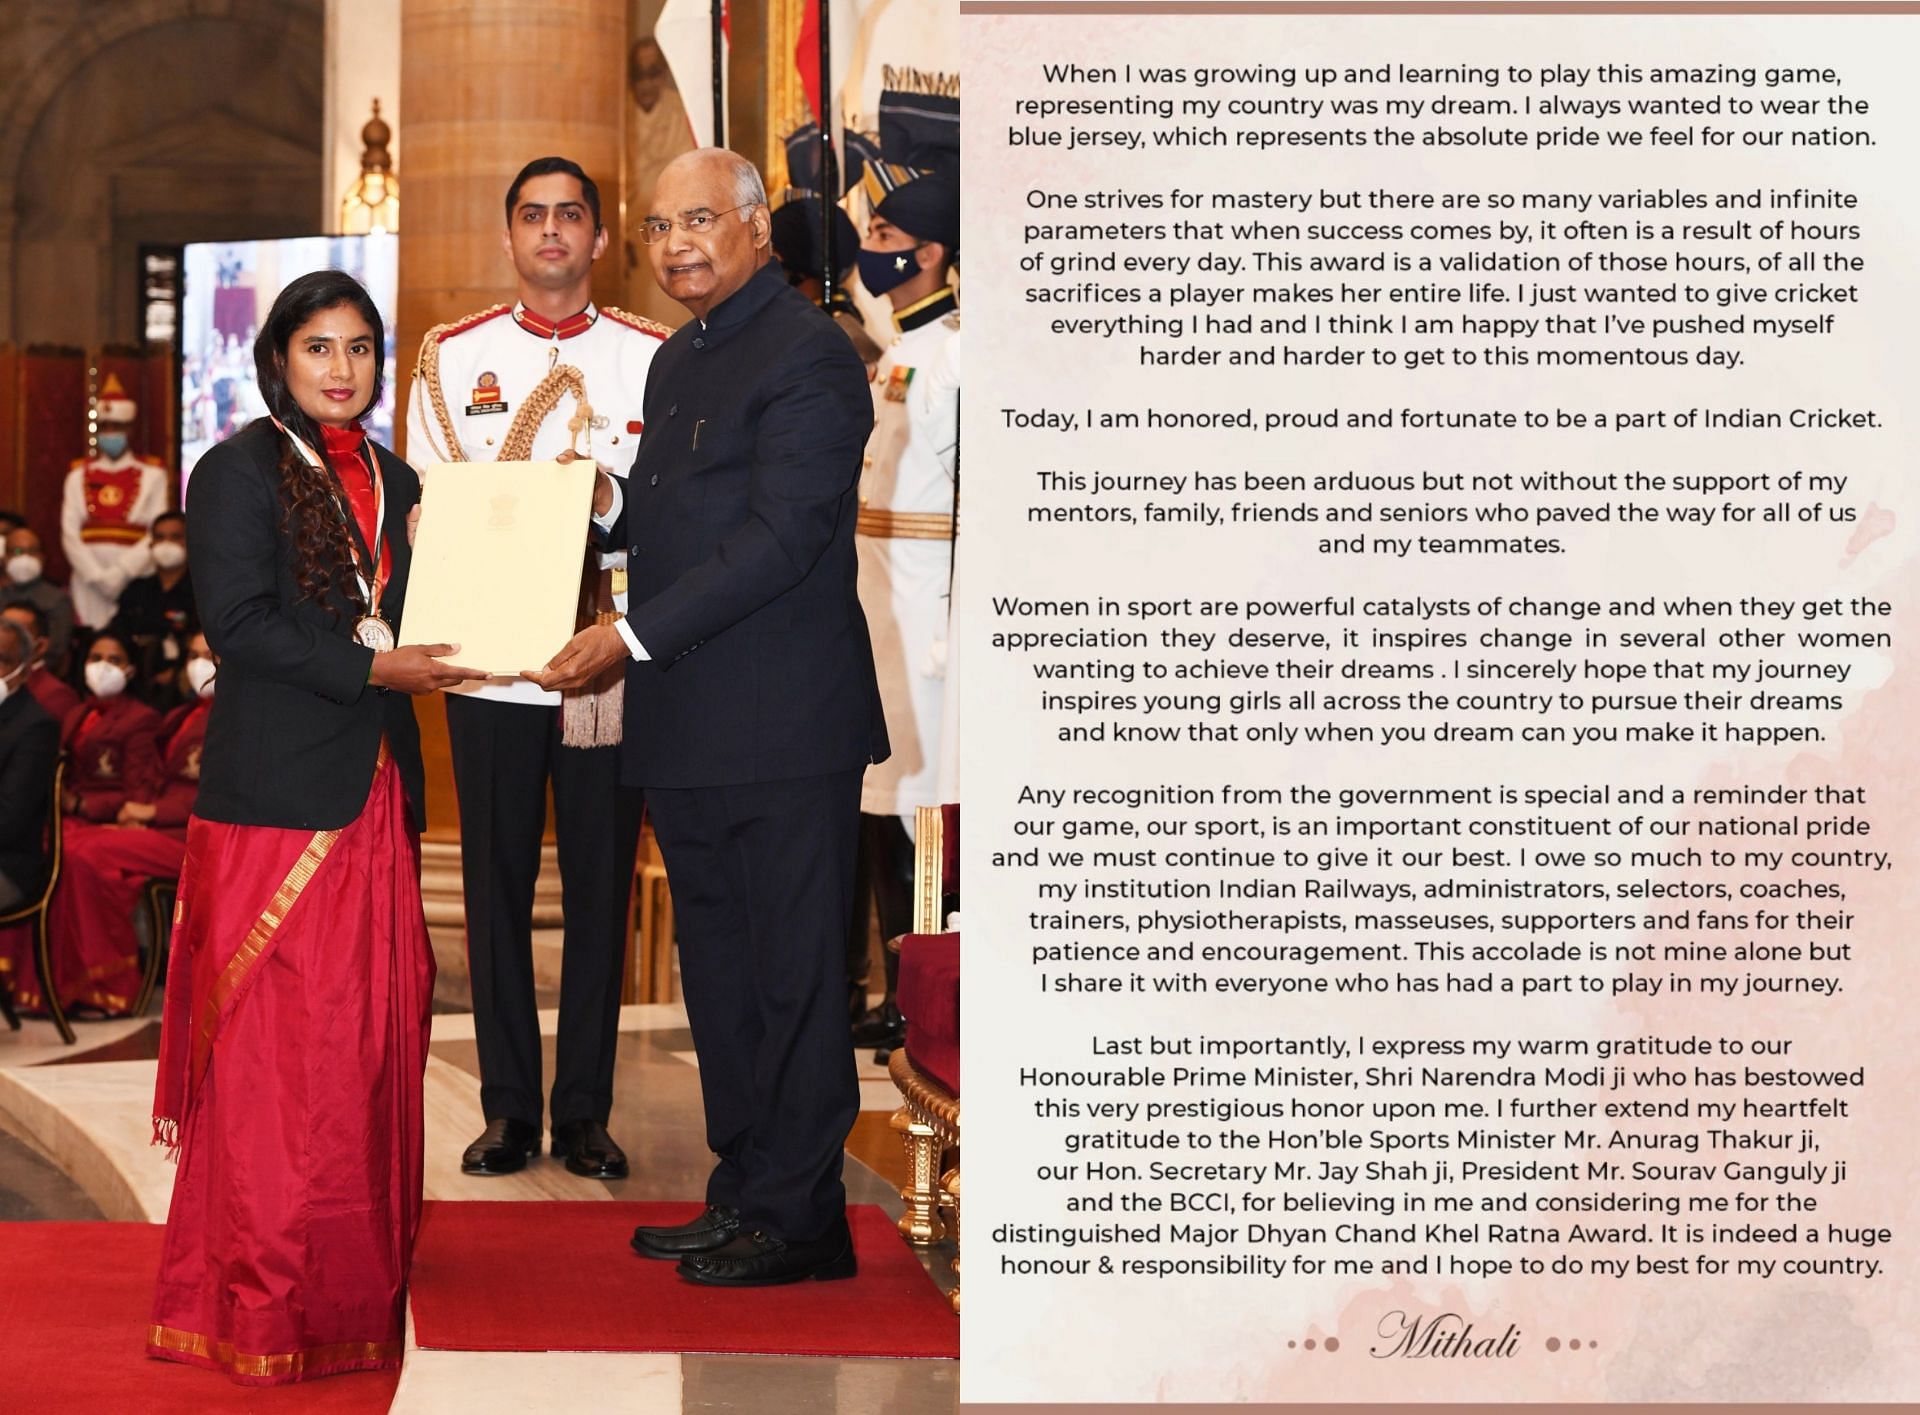 Mithali Raj pens an emotional note after receiving the prestigious Khel Ratna award